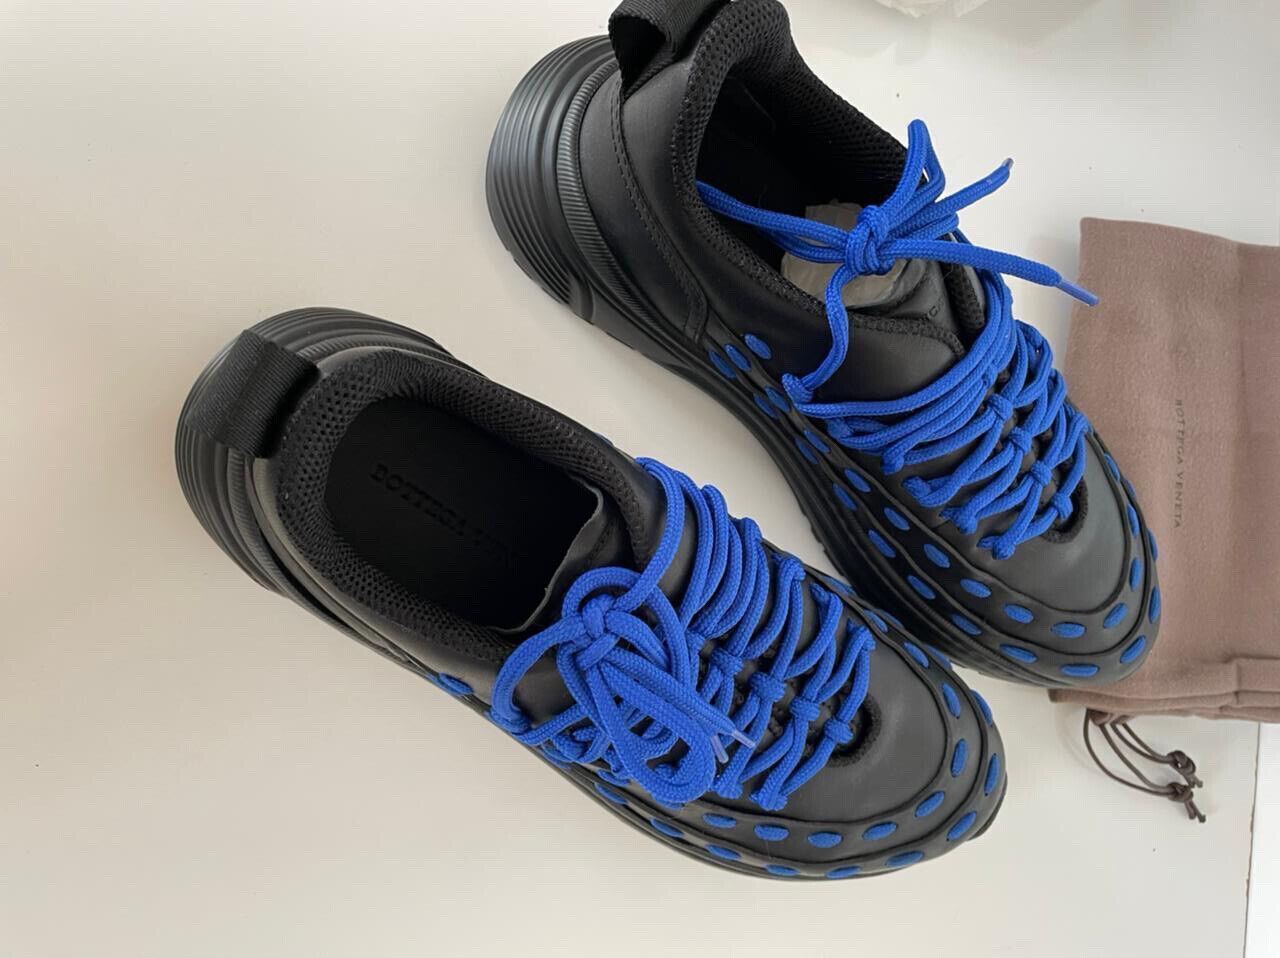 NIB $950 Bottega Veneta Mens Leather Black/Blue Sneakers 8.5 US 578305 1014